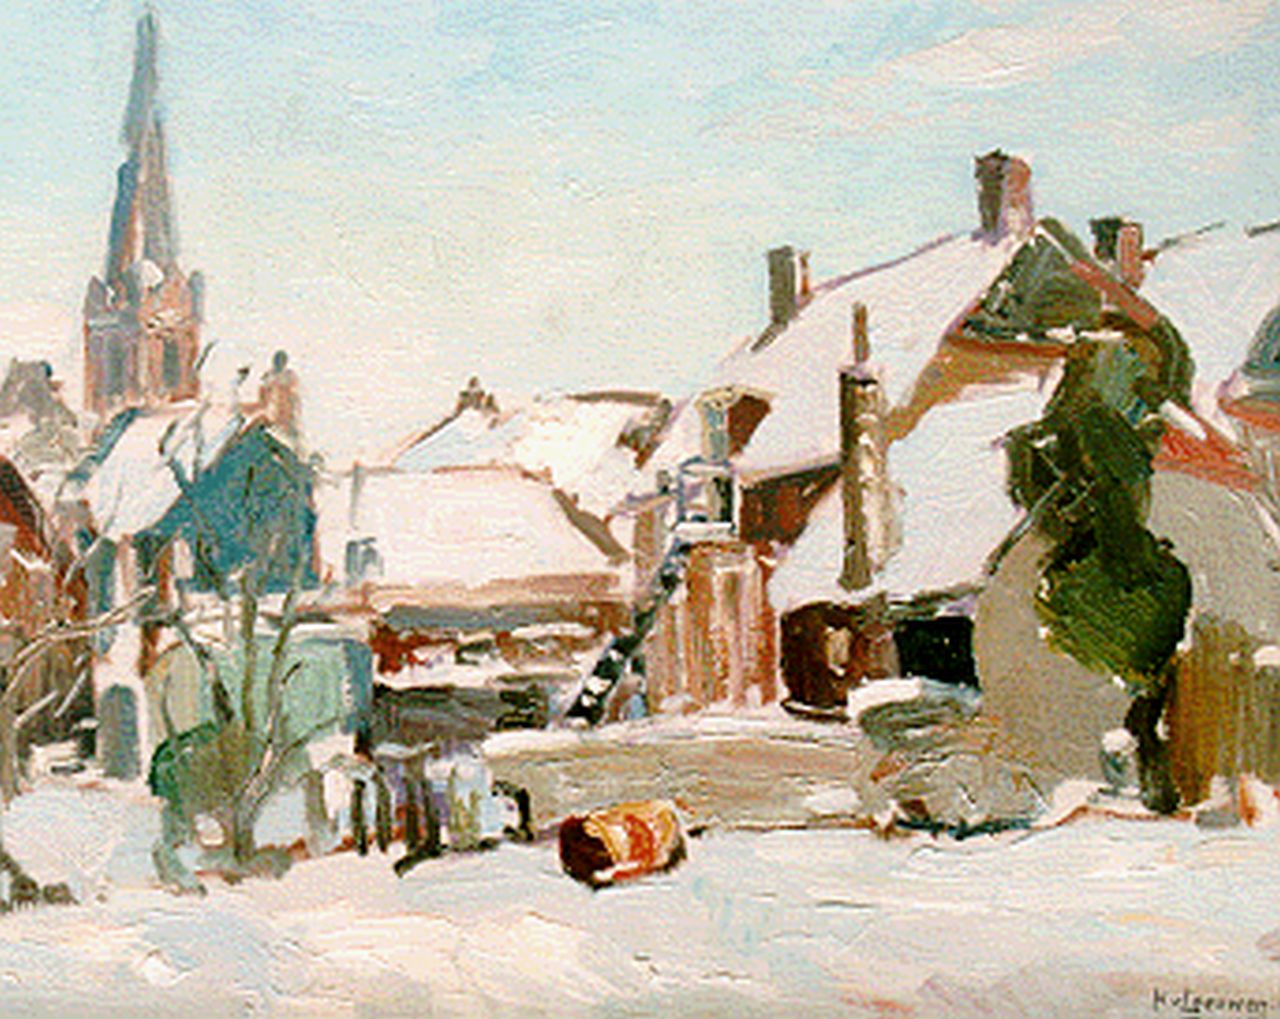 Leeuwen H. van | Hendrik 'Henk' van Leeuwen, A snow-covered landscape, oil on canvas 40.3 x 50.0 cm, signed l.r.